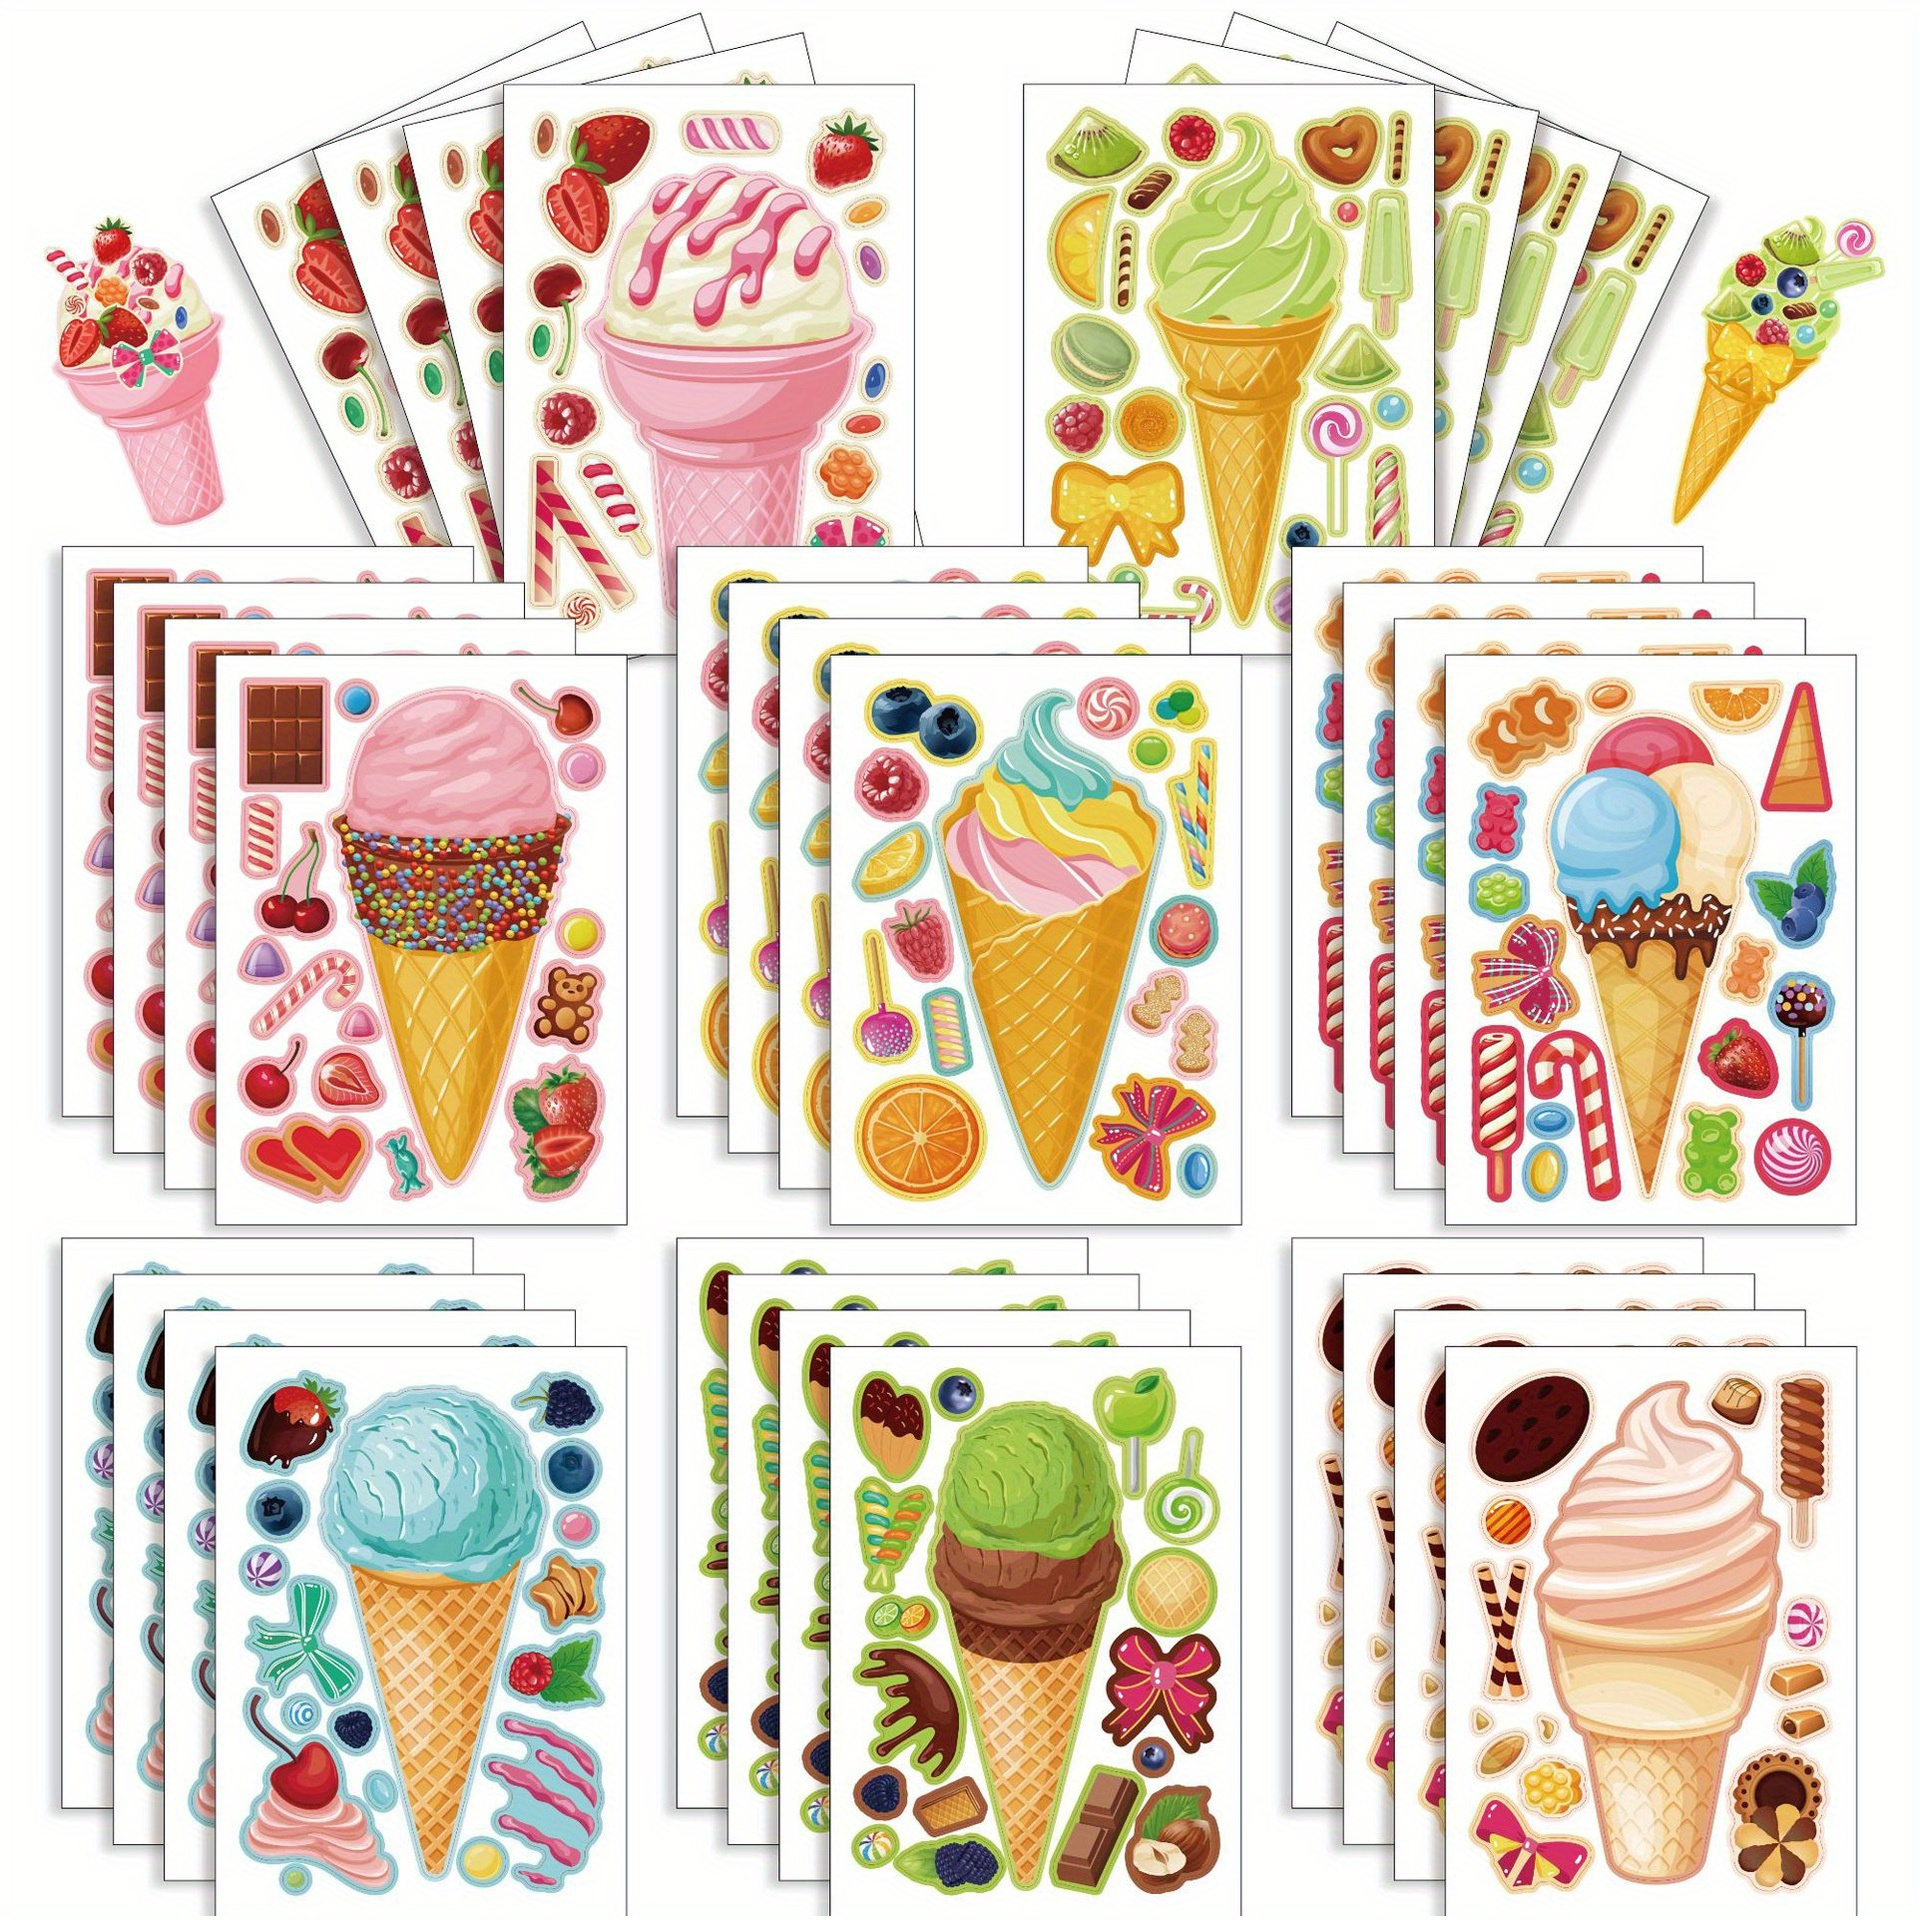 Ice Cream Resin Stickers, Cute Dessert Sticker